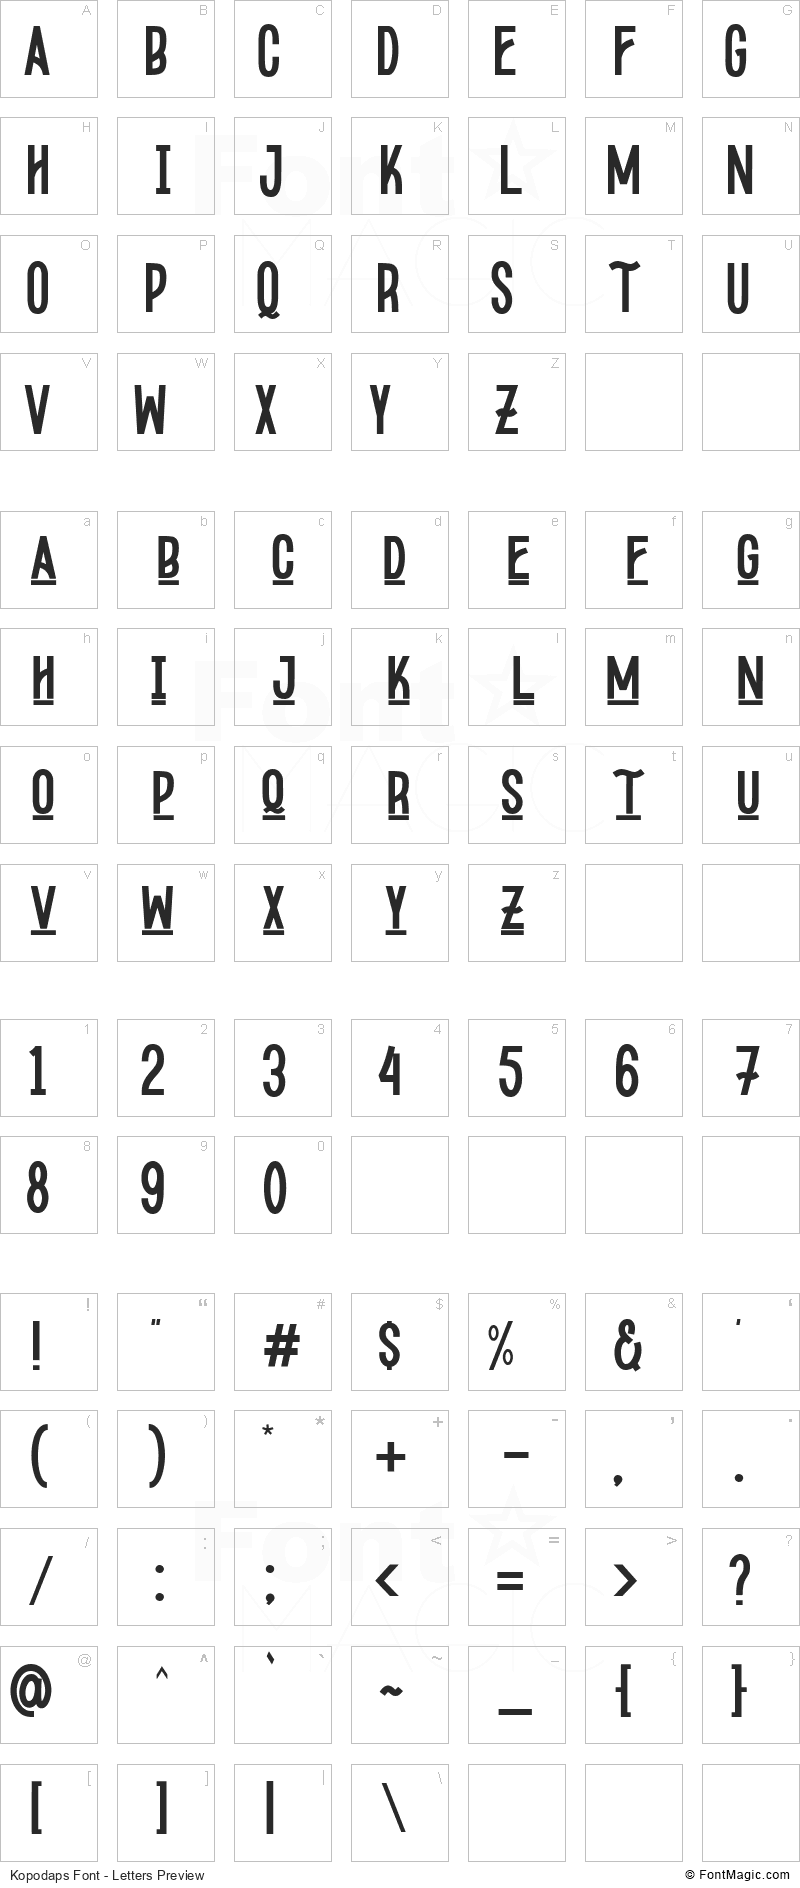 Kopodaps Font - All Latters Preview Chart